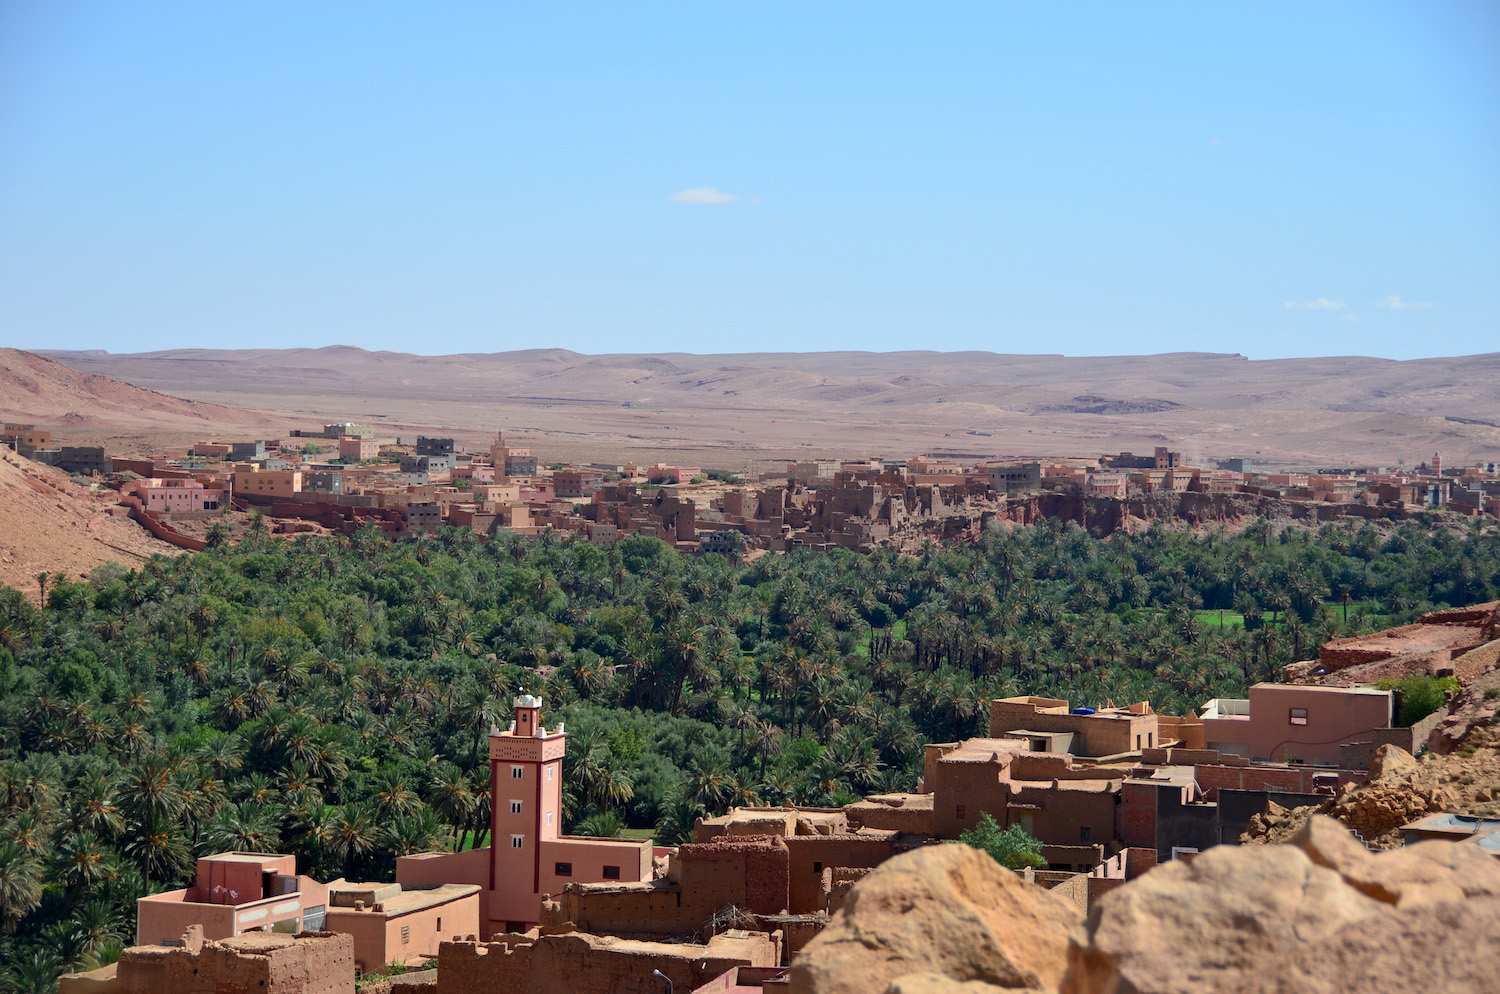 Marrakech Deserst Tours and Sand Dunes